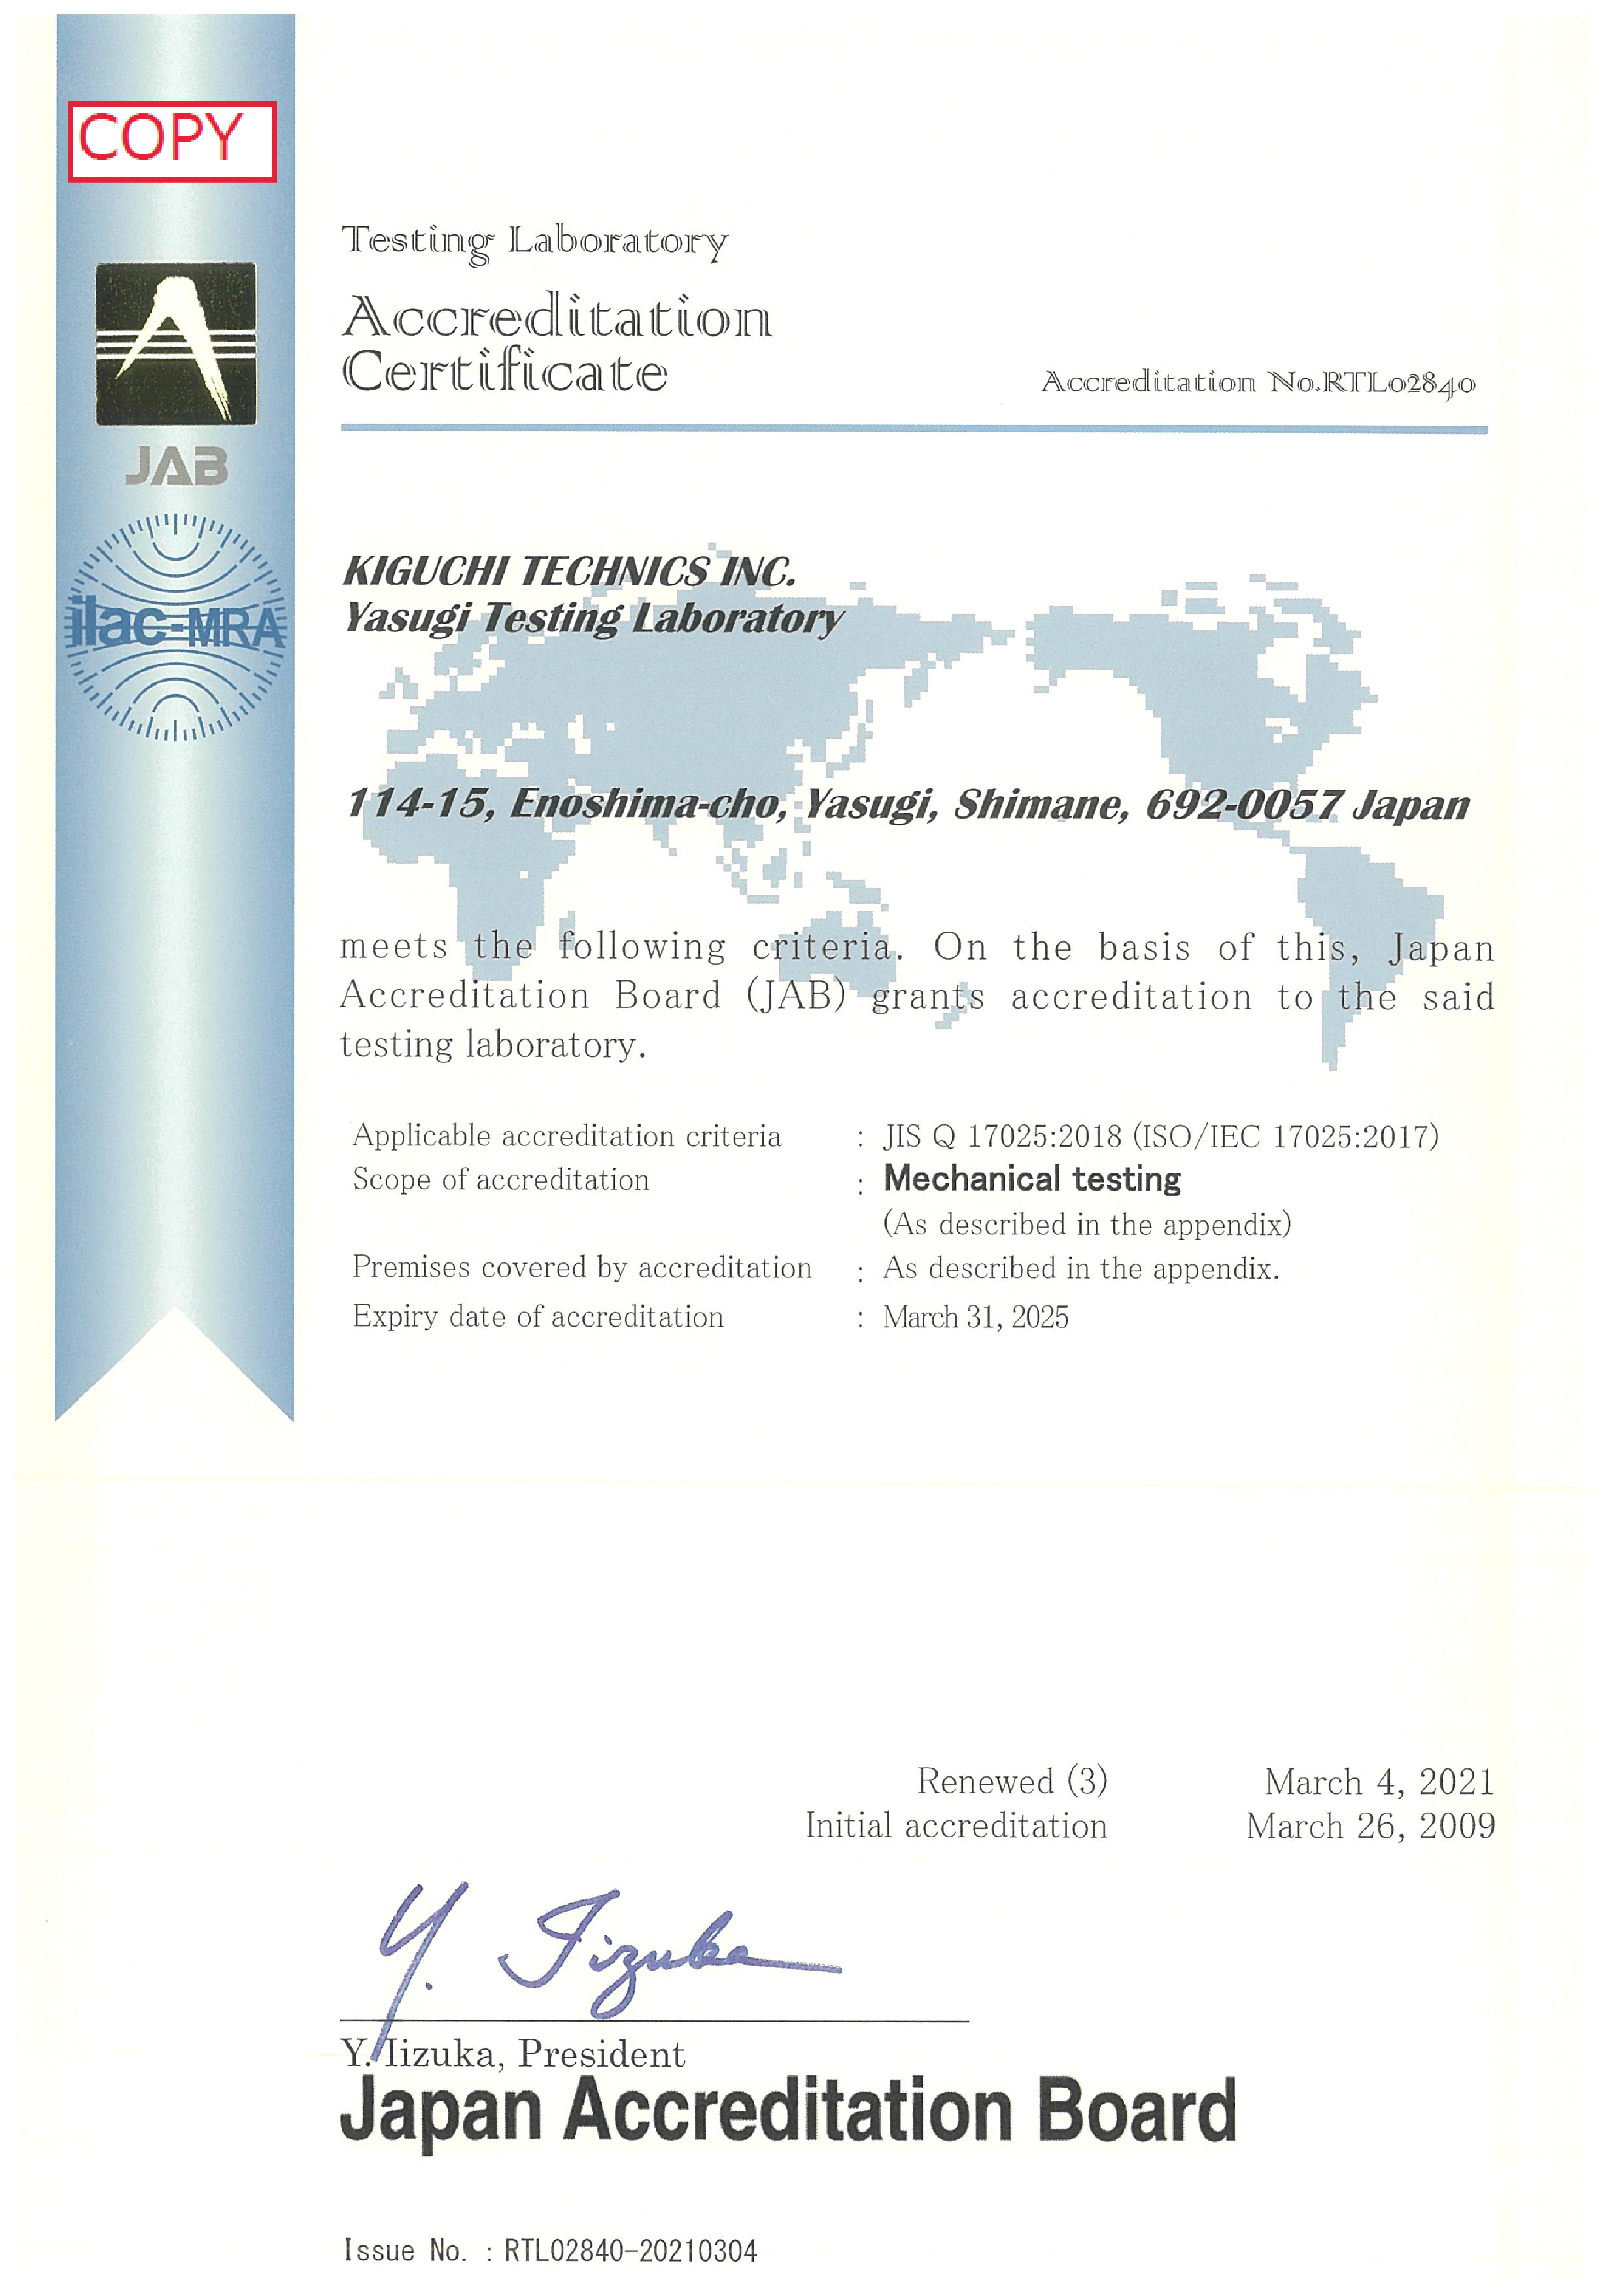 ISO/IEC 17025